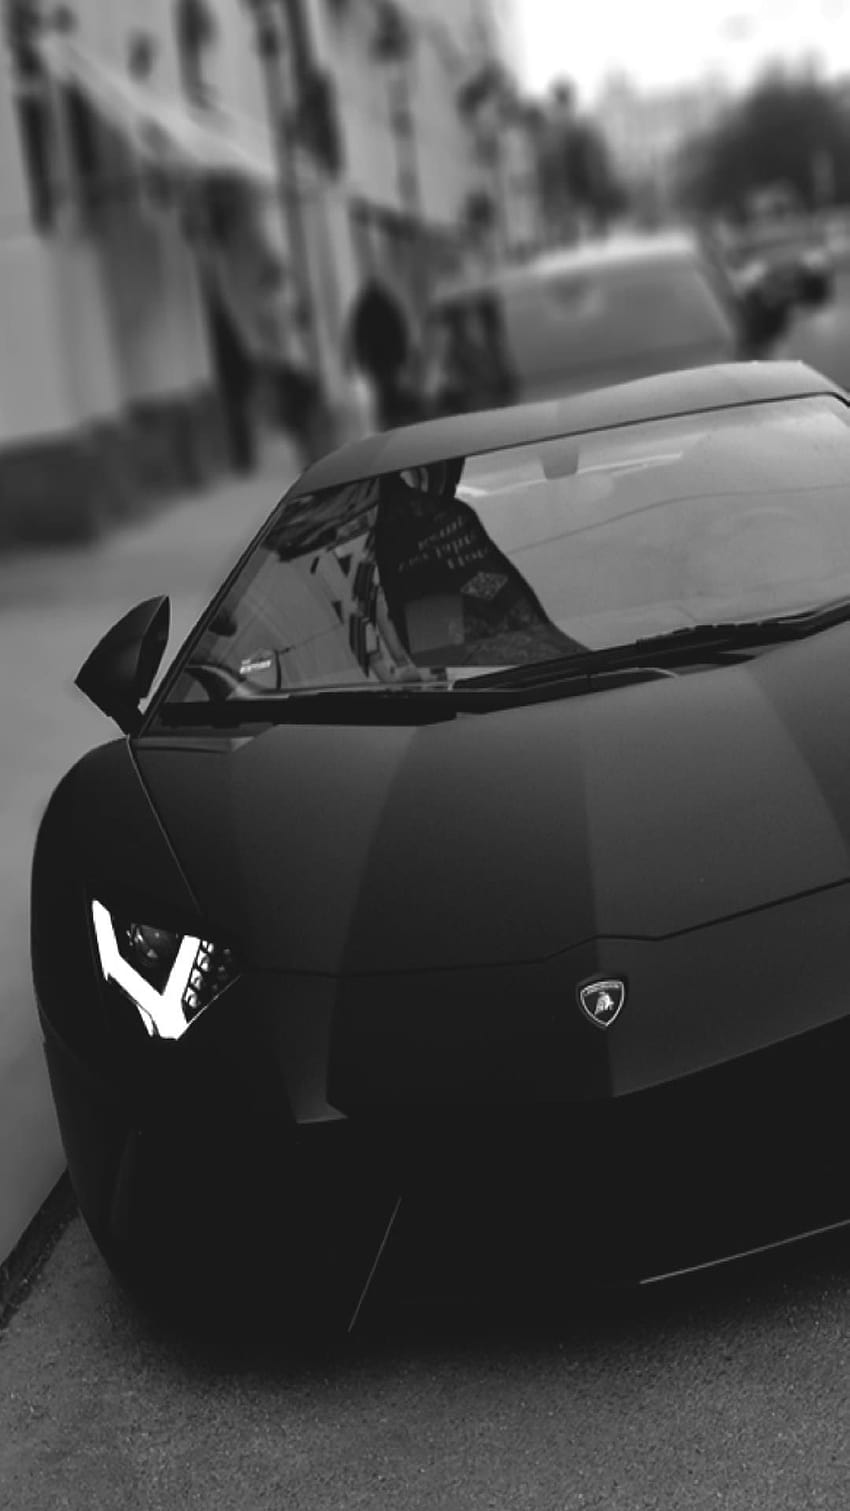 Lamborghini preto, carro lamborghini móvel Papel de parede de celular HD